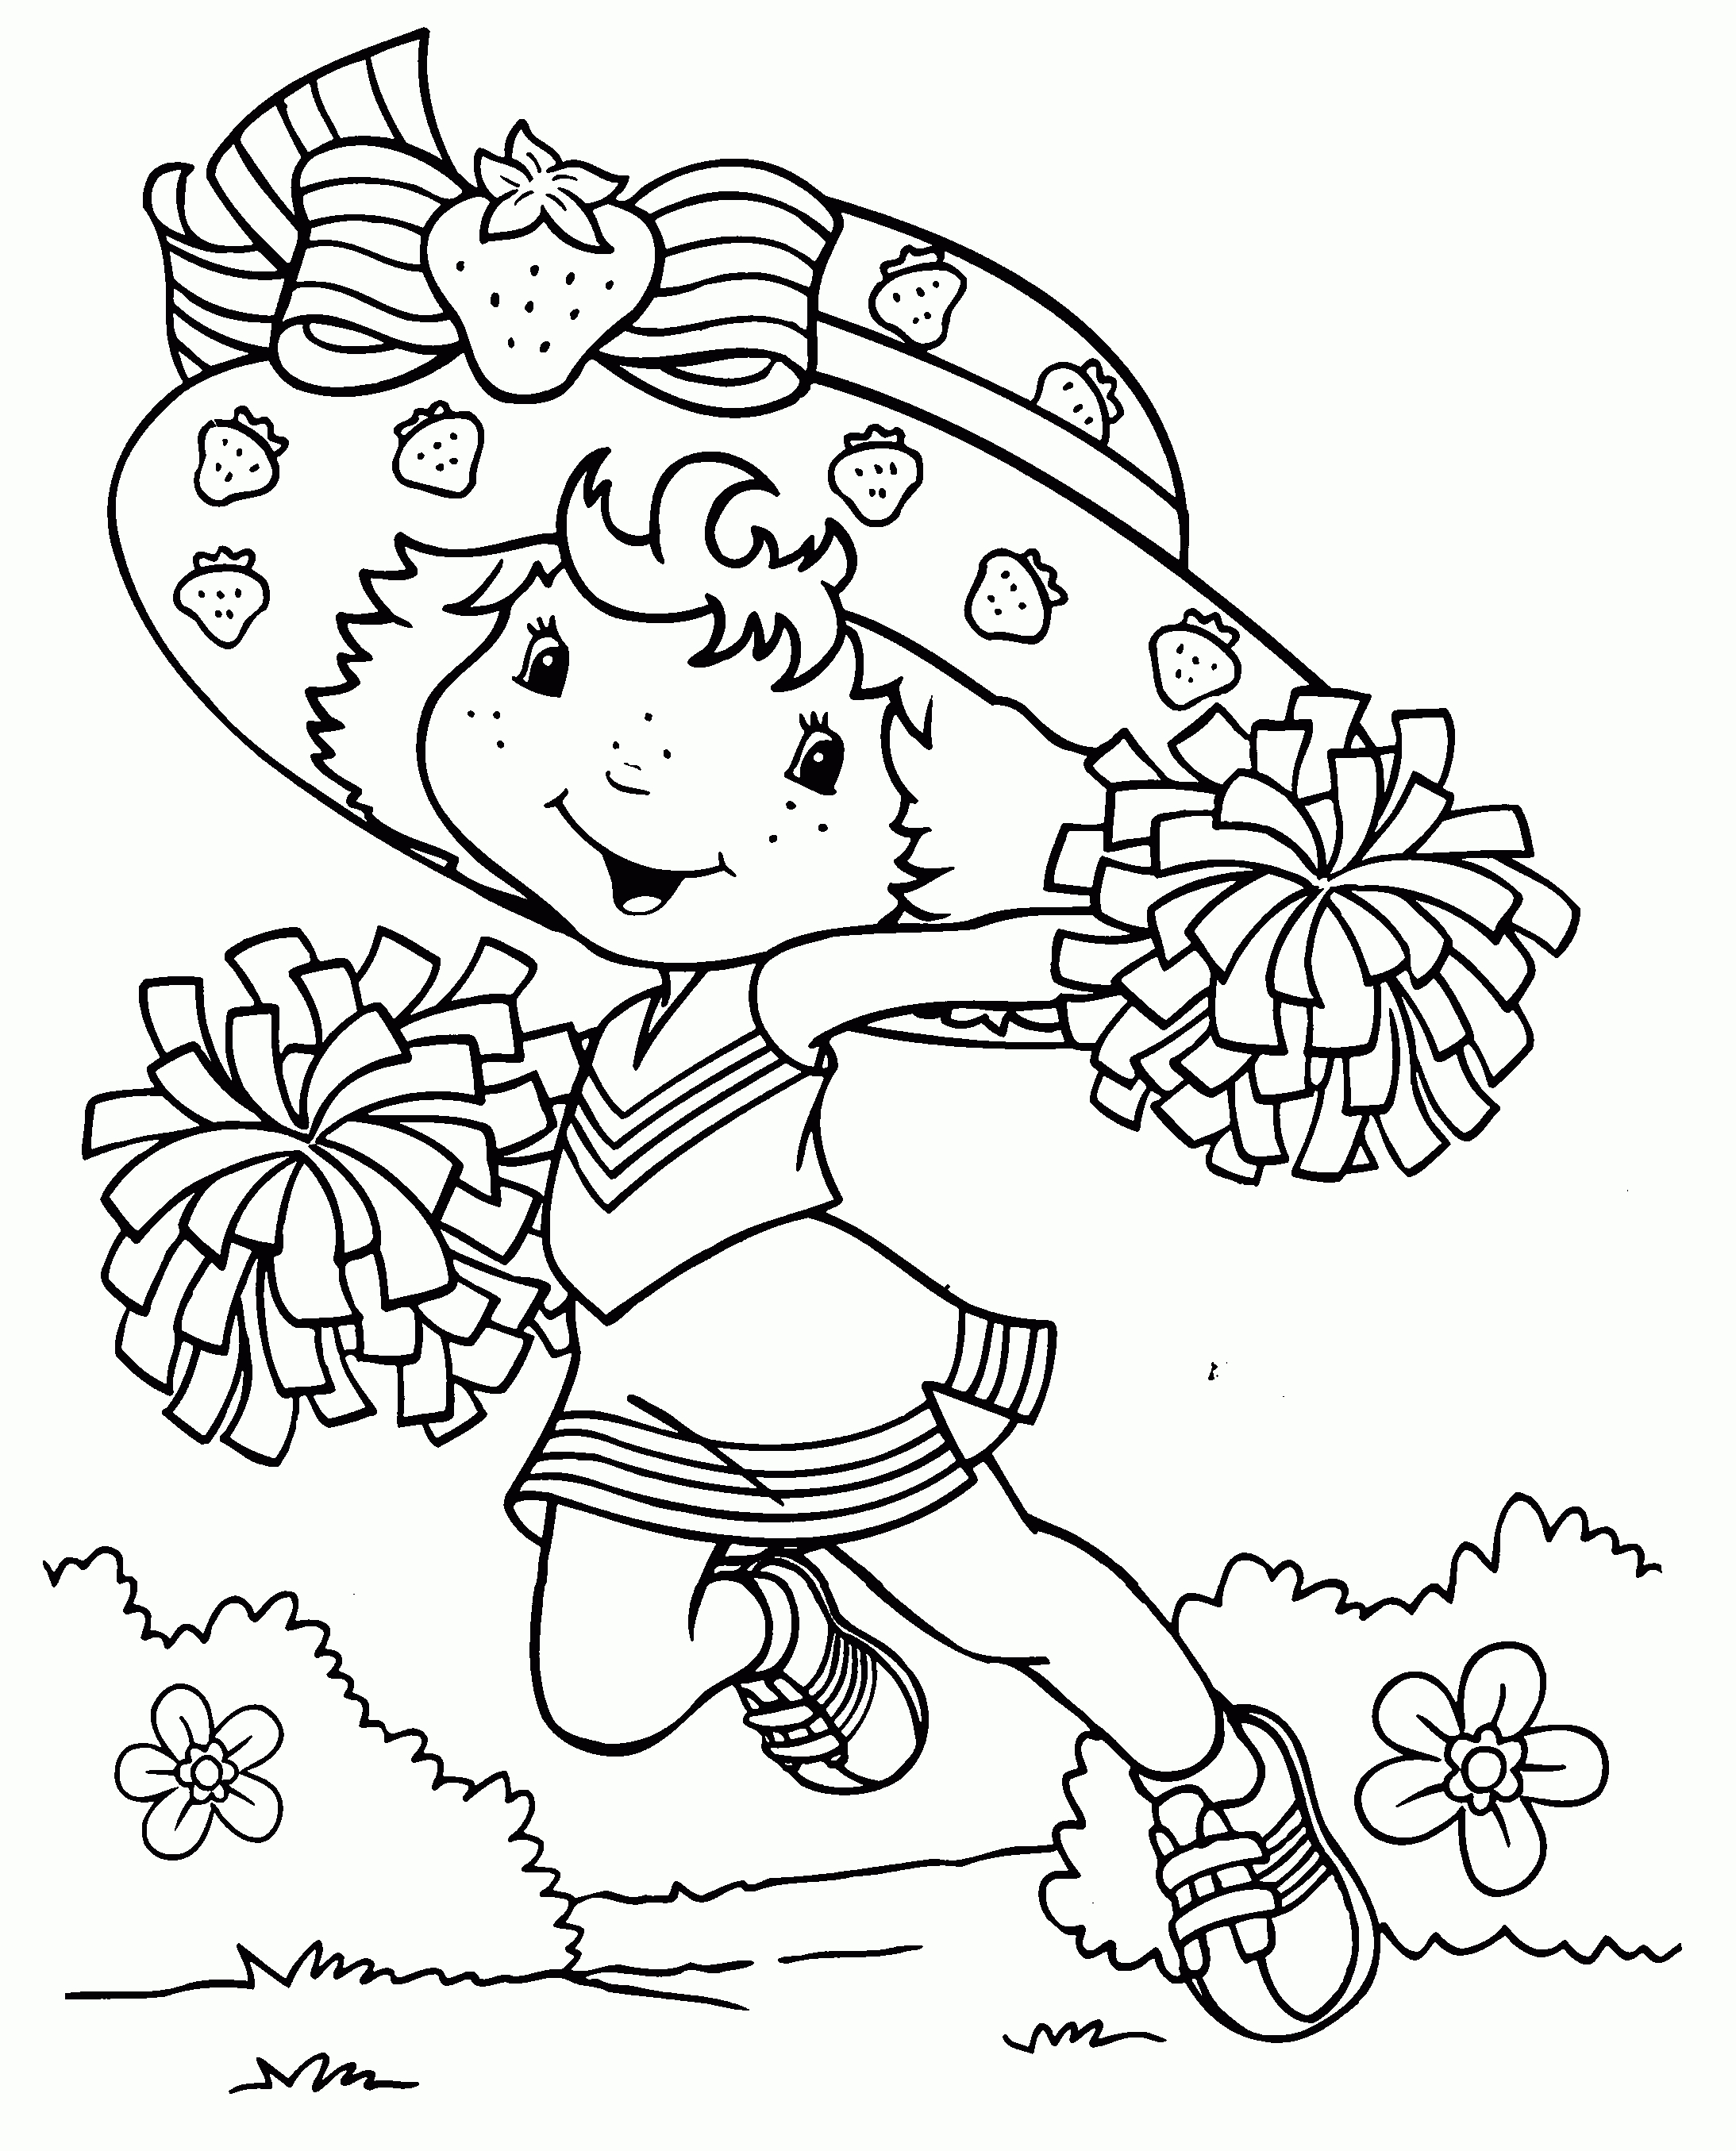 Free Printable Strawberry Shortcake Coloring Pages For Kids | Crafts - Strawberry Shortcake Coloring Pages Free Printable